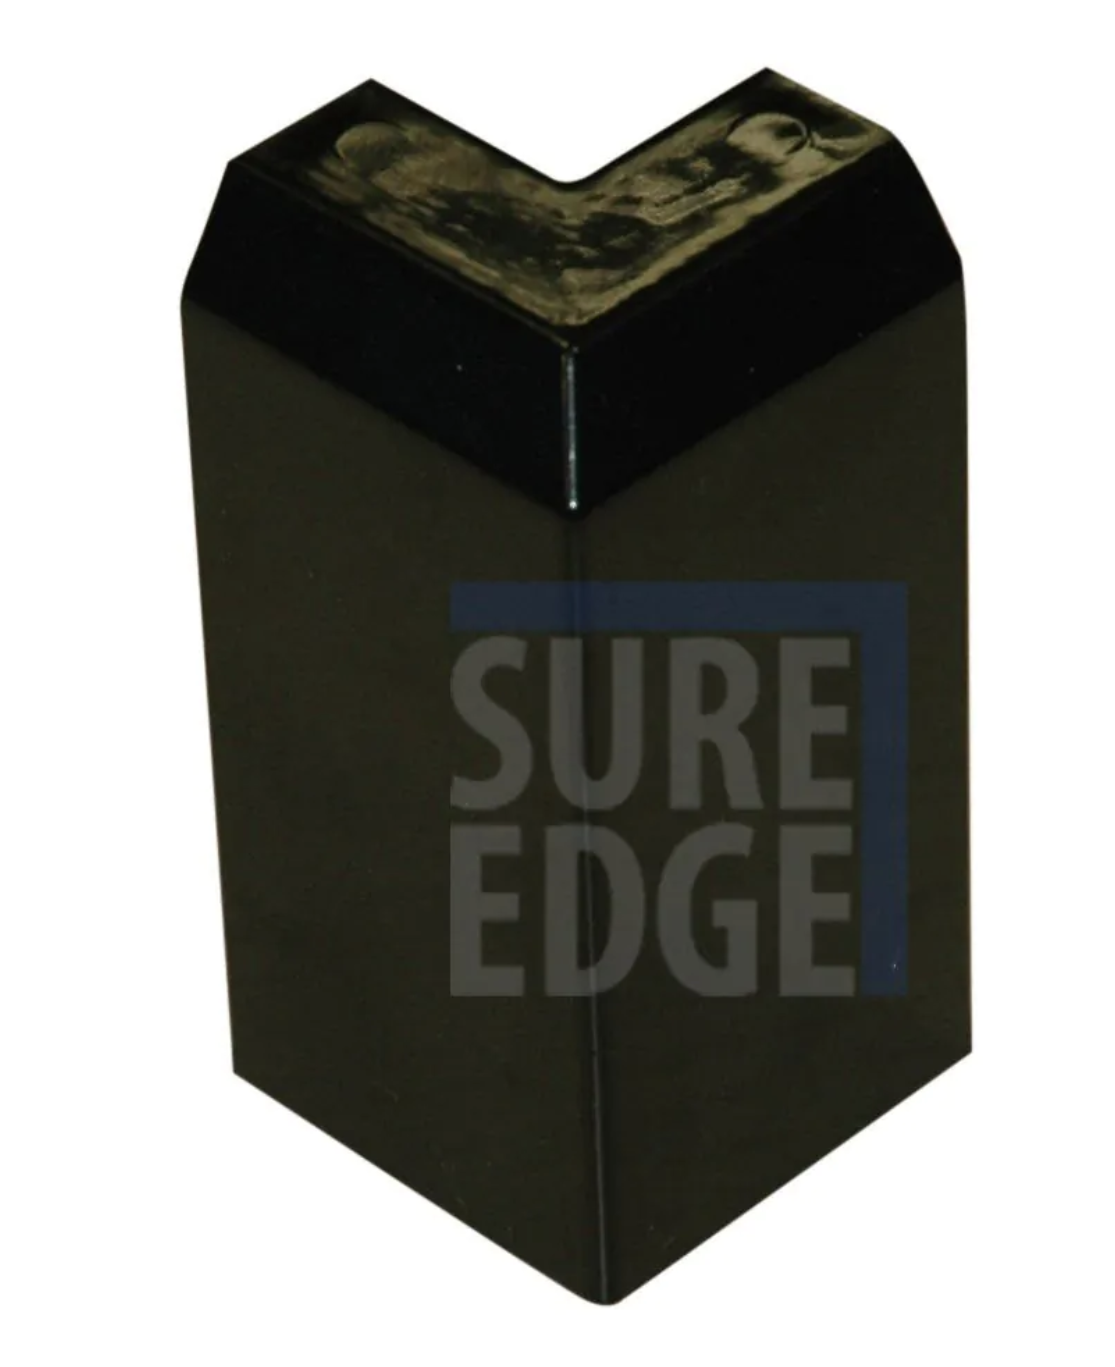 Sure Edge Kerb External Corner For EPDM Roofing